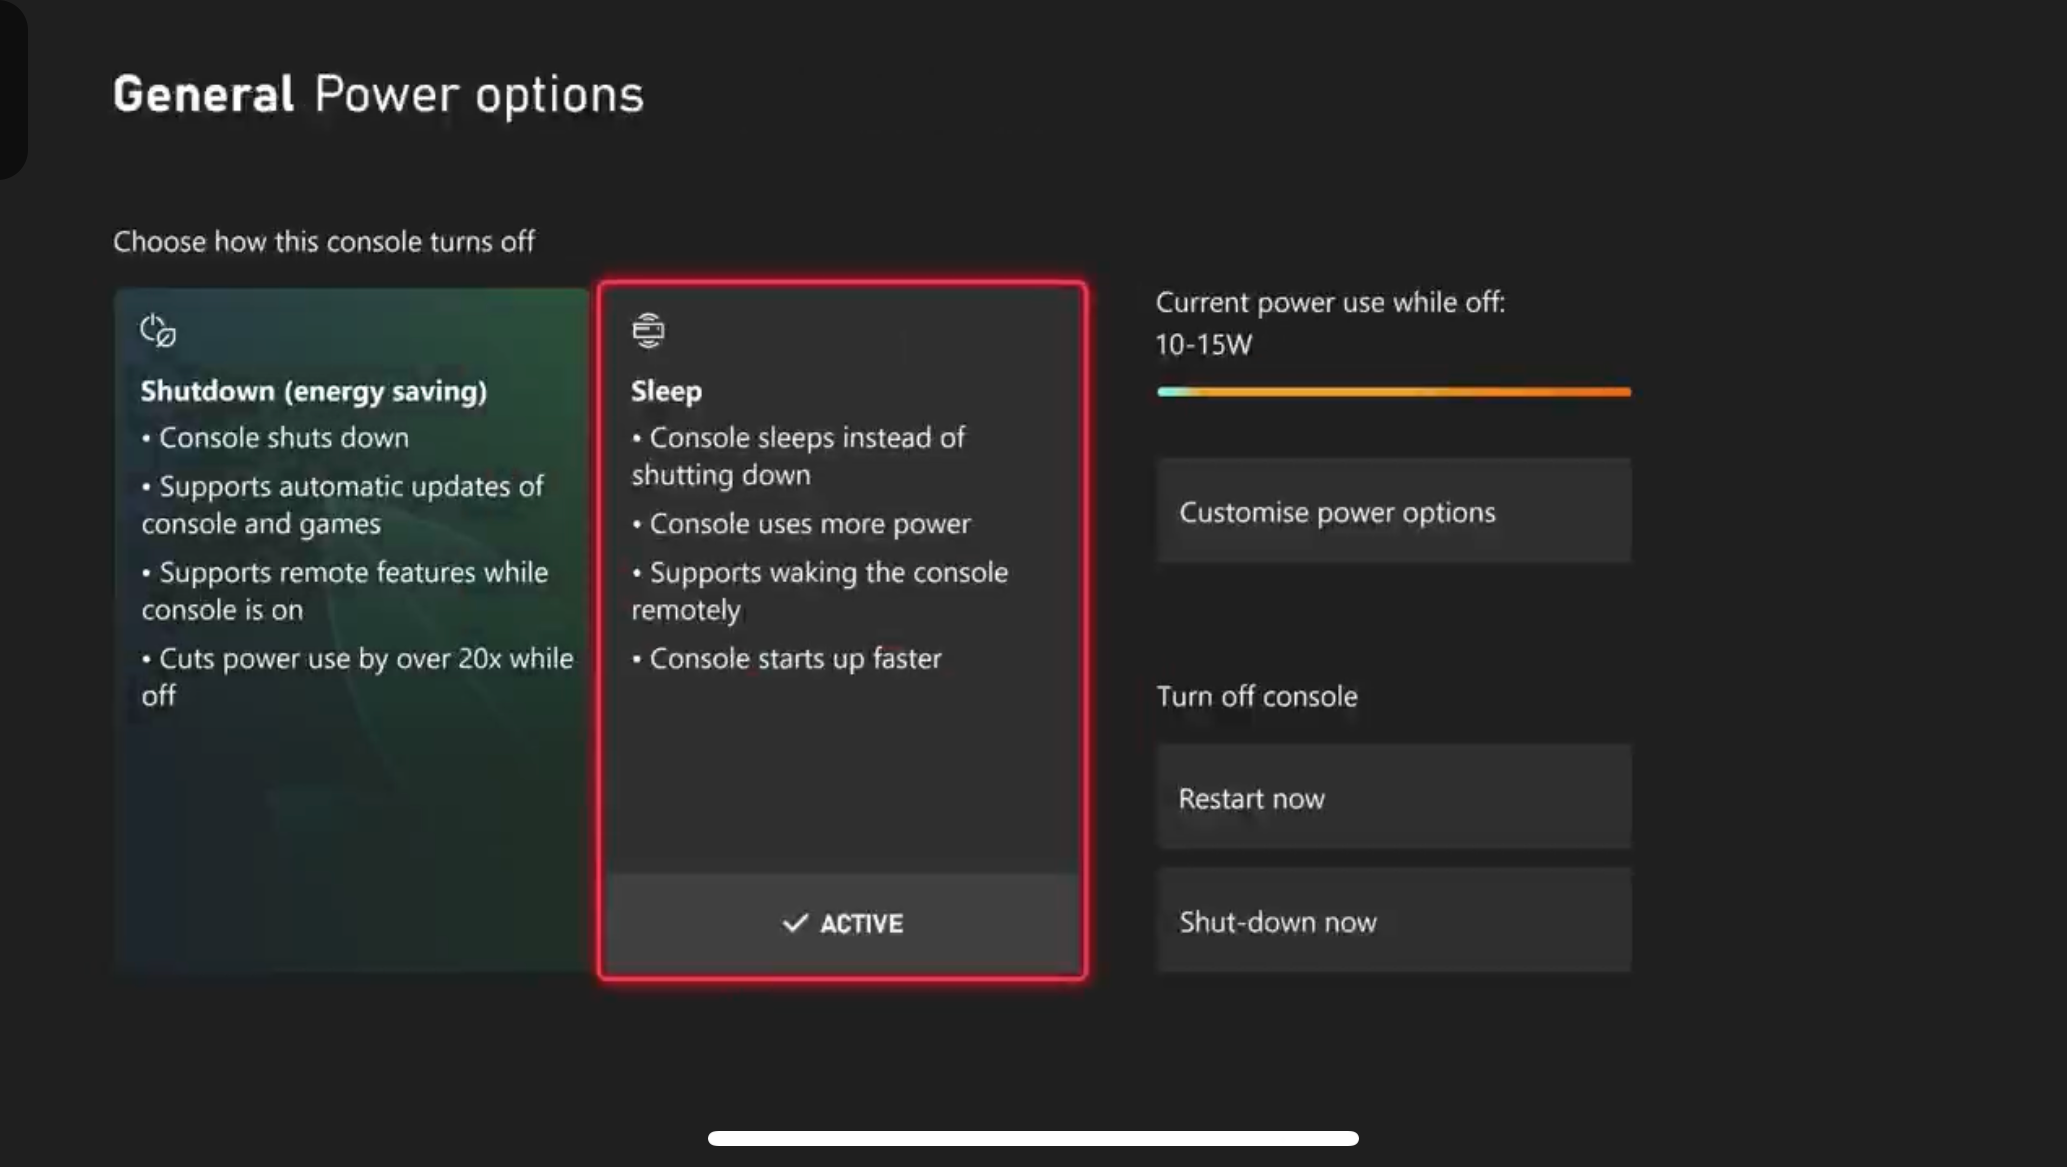 Enable Sleep mode on your Xbox to use Discord